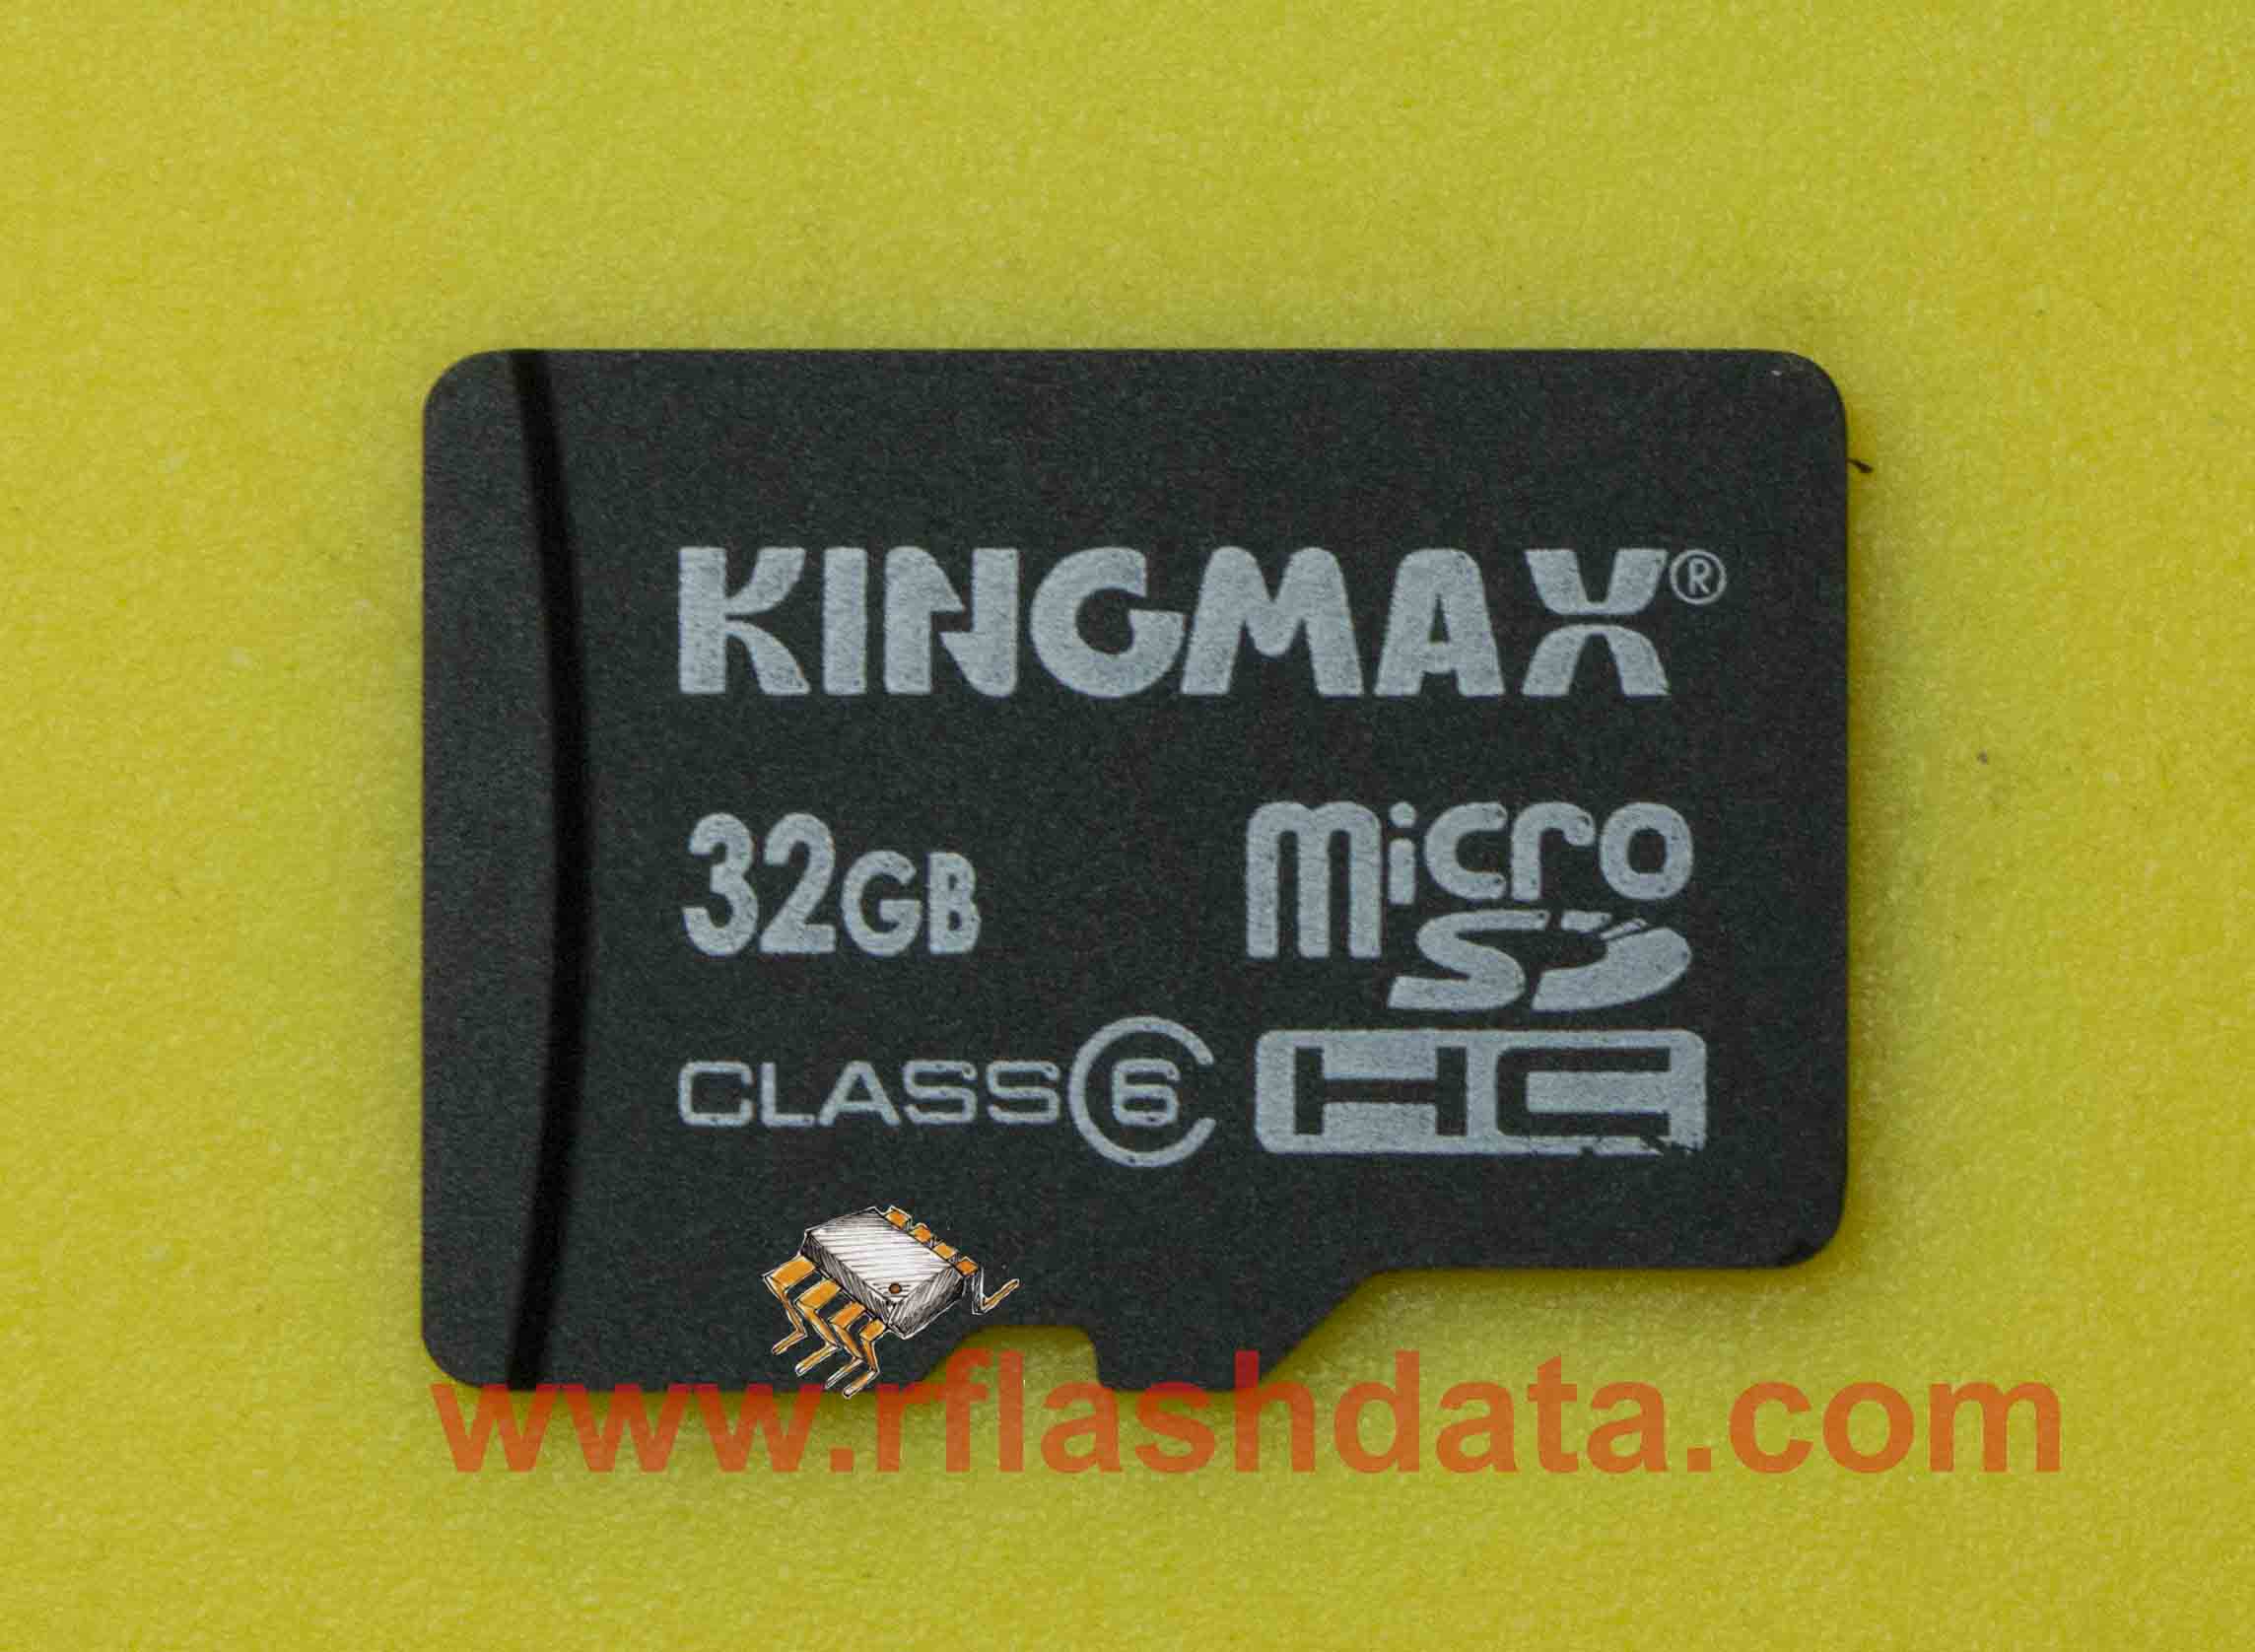 Kingmax microSD data recovery